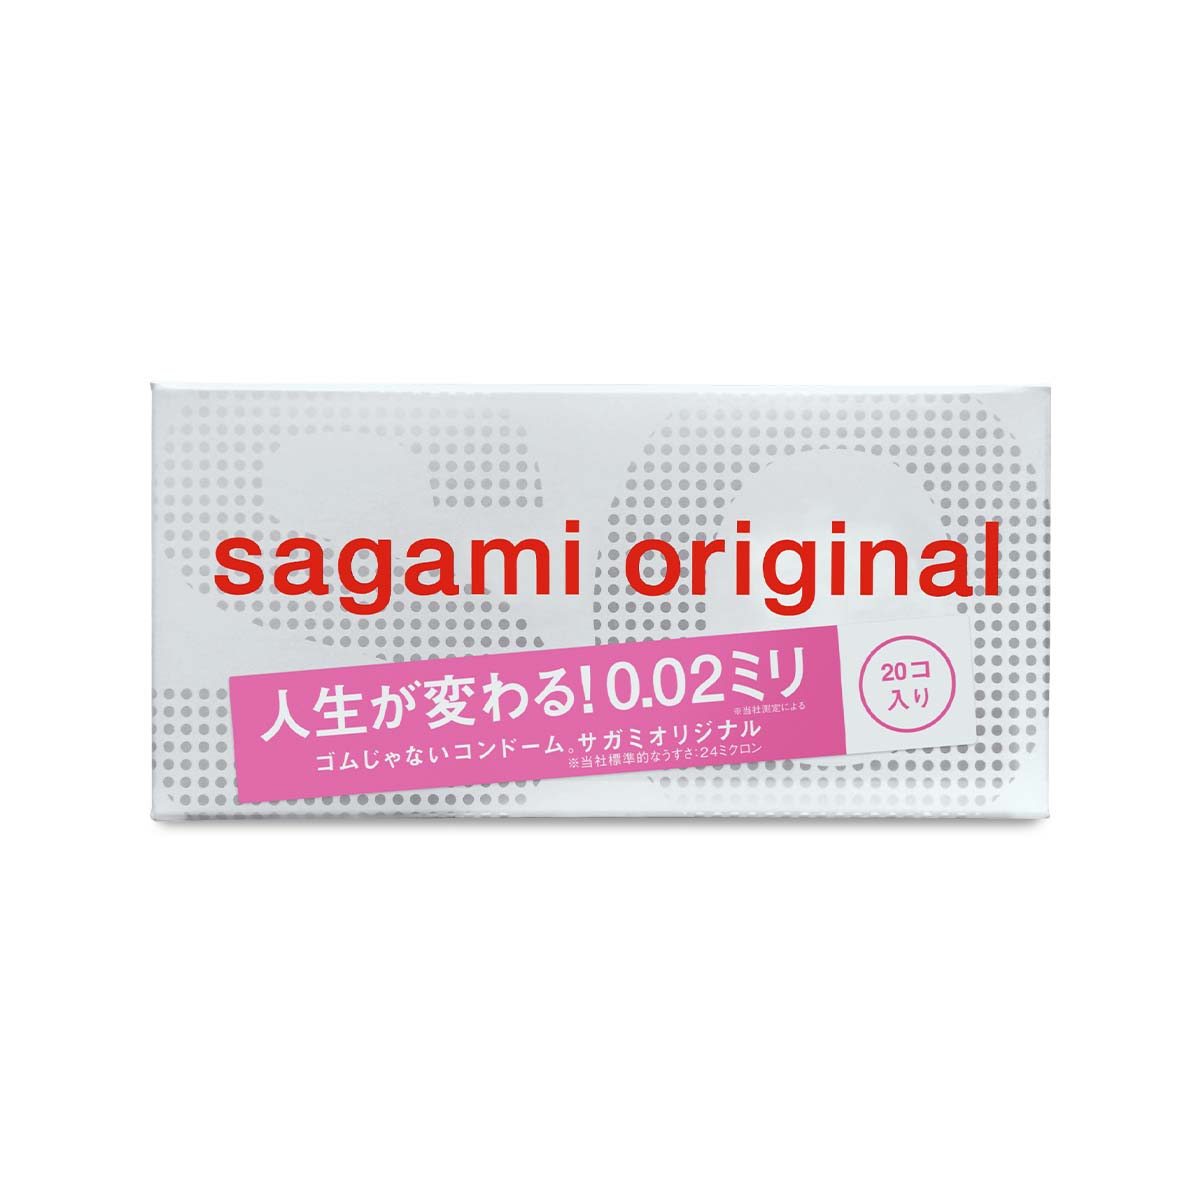 Sagami Original 0.02 20s